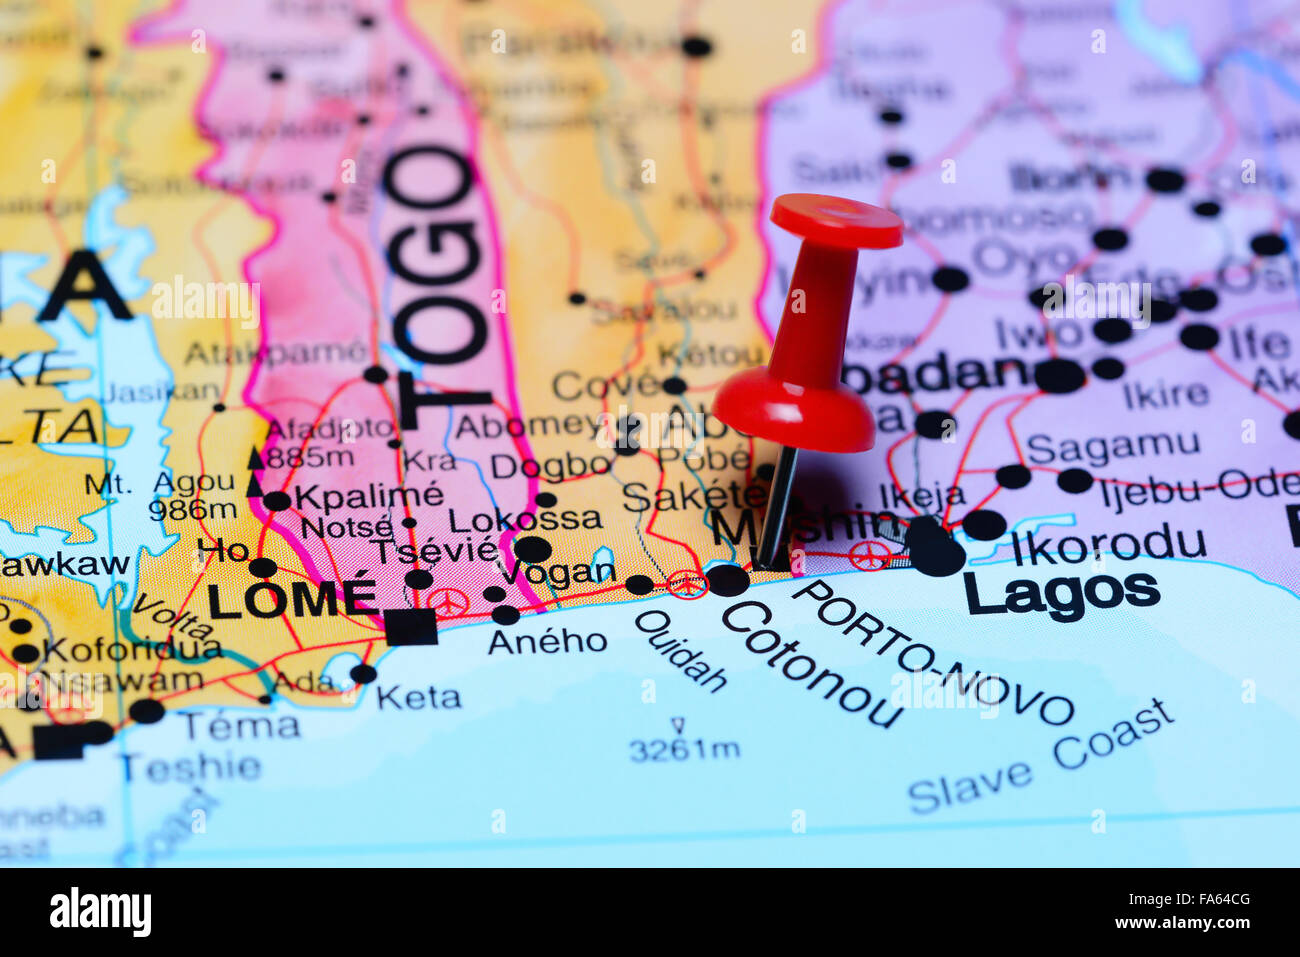 Porto Novo Pinned On A Map Of Africa Stock Photo Alamy